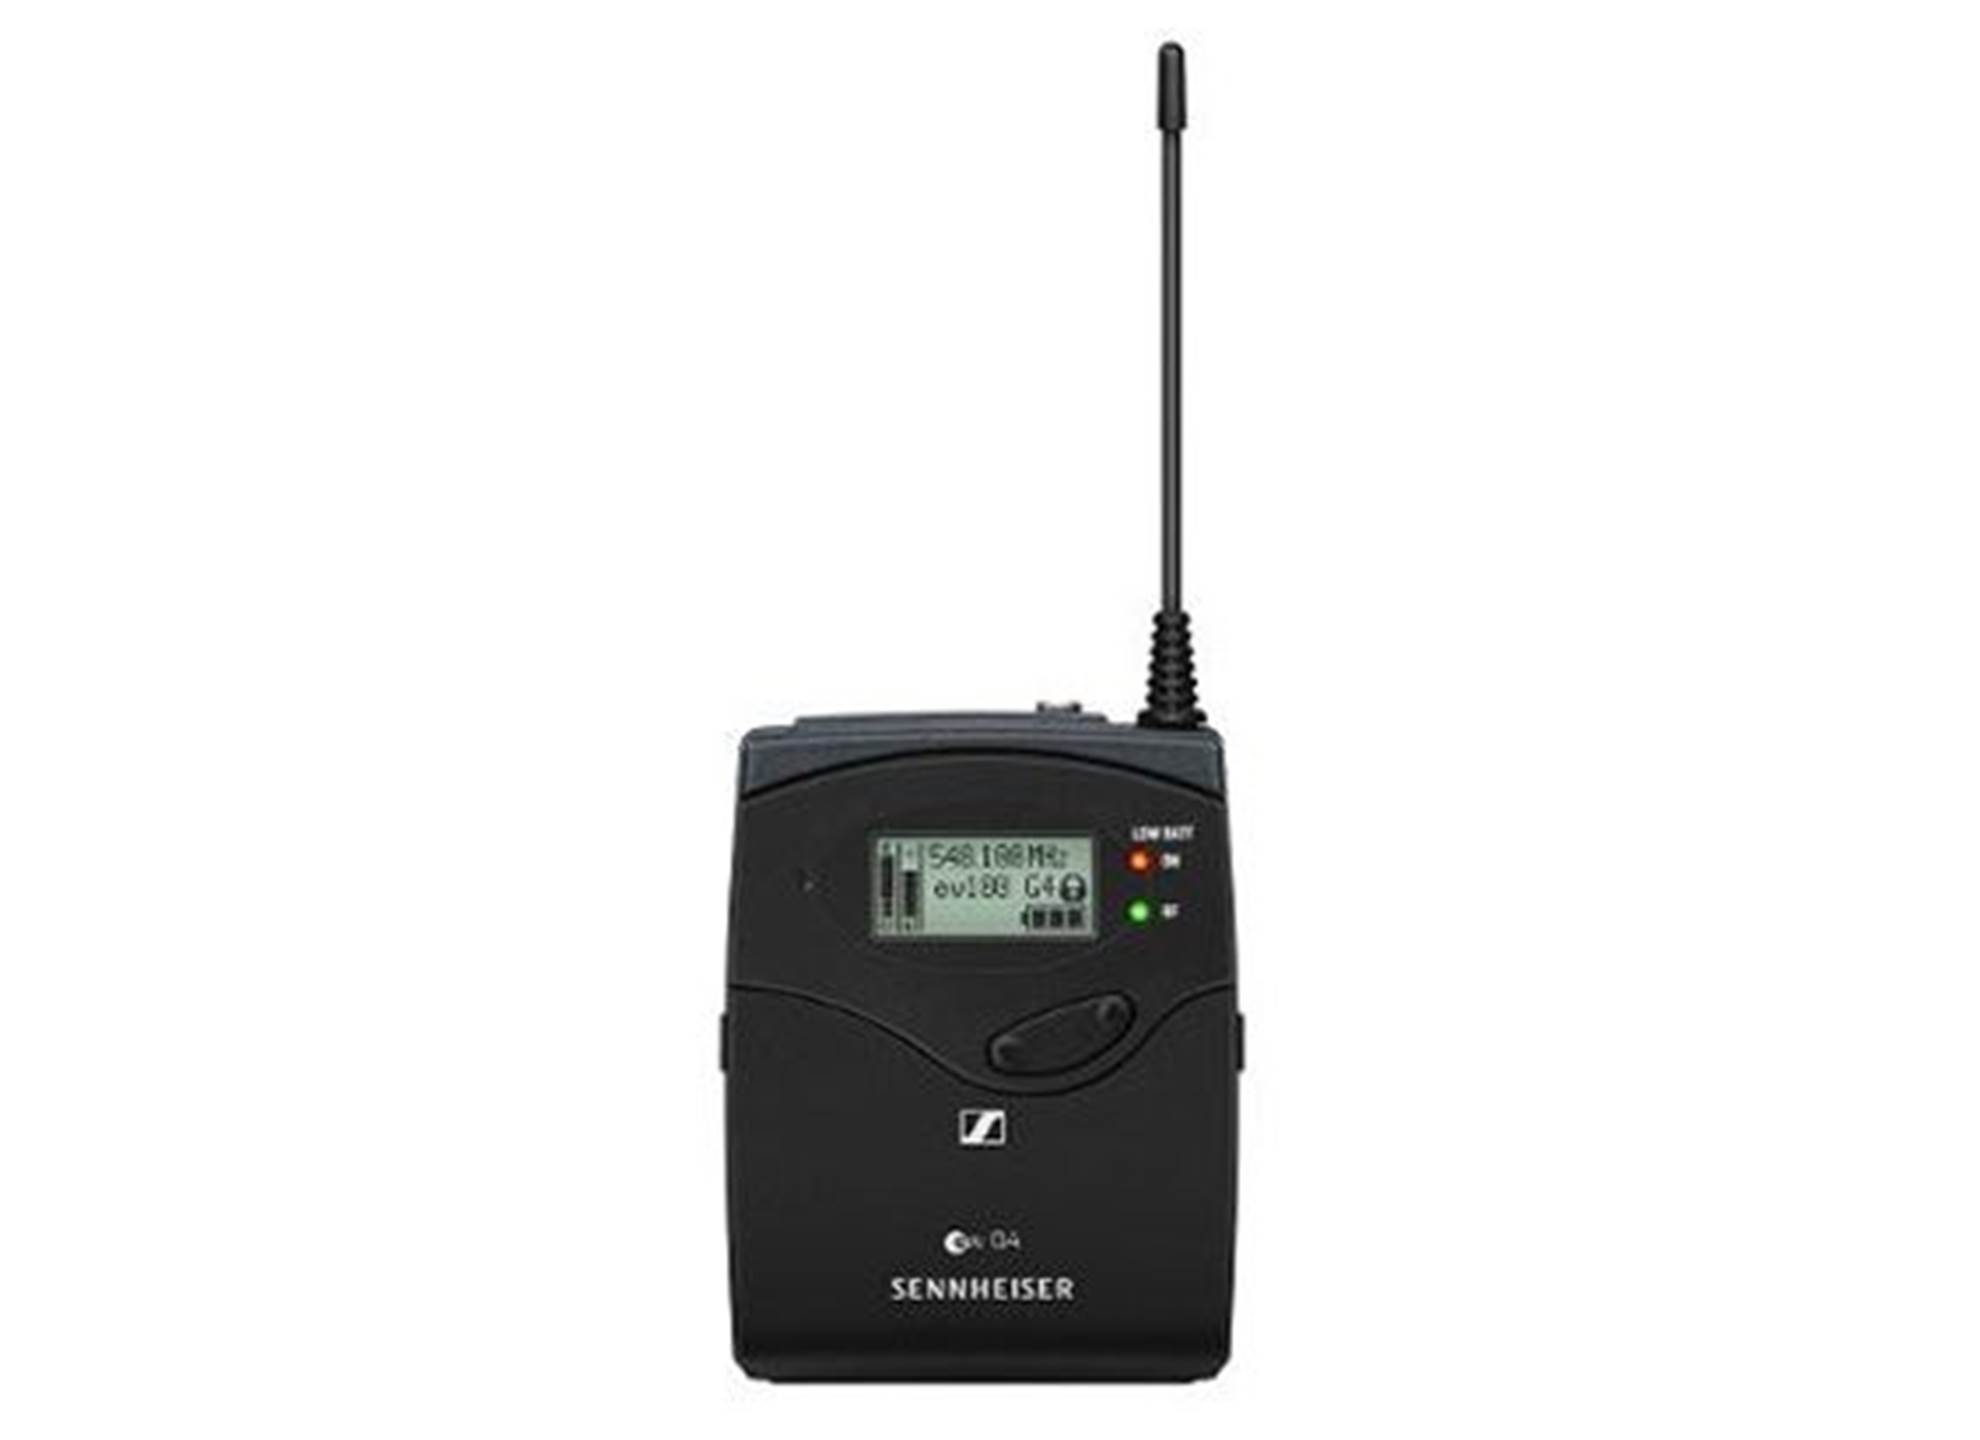 EK 100 G4-A1 470 - 516 MHz